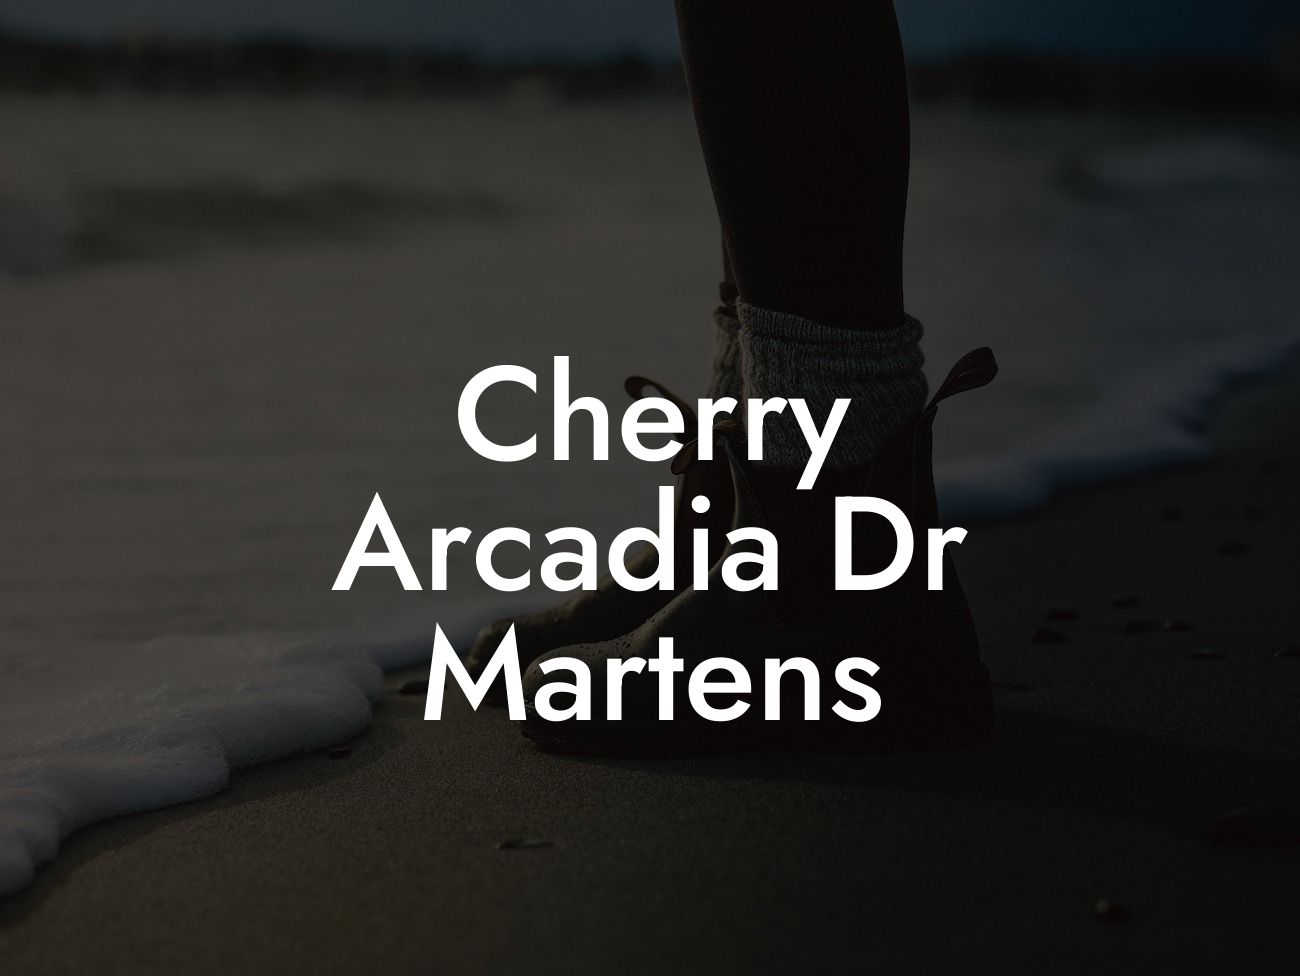 Cherry Arcadia Dr Martens